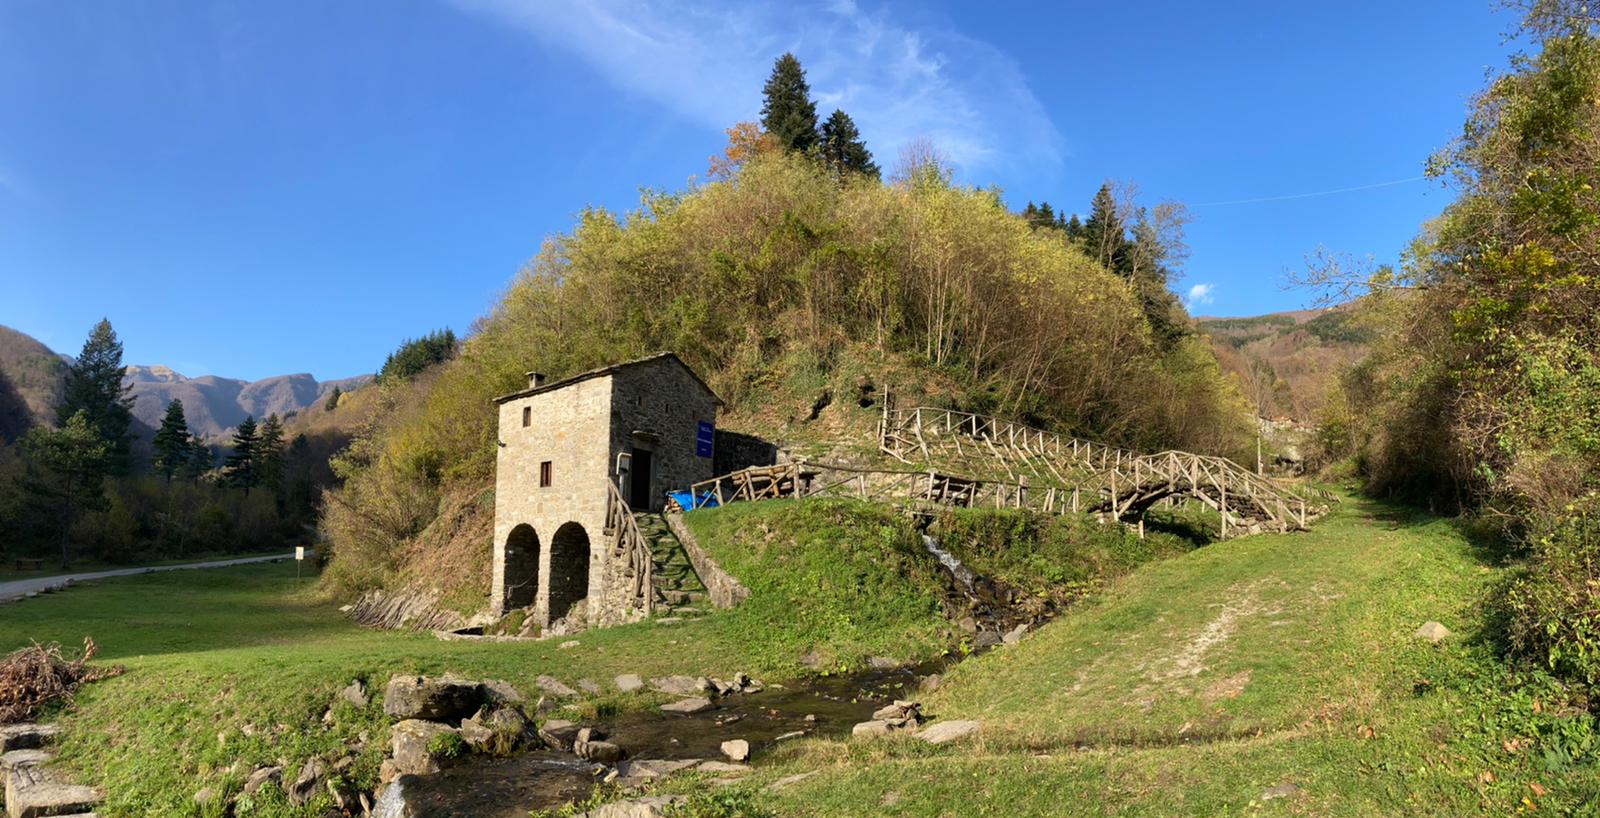 The mill of Giamba di Orsigna